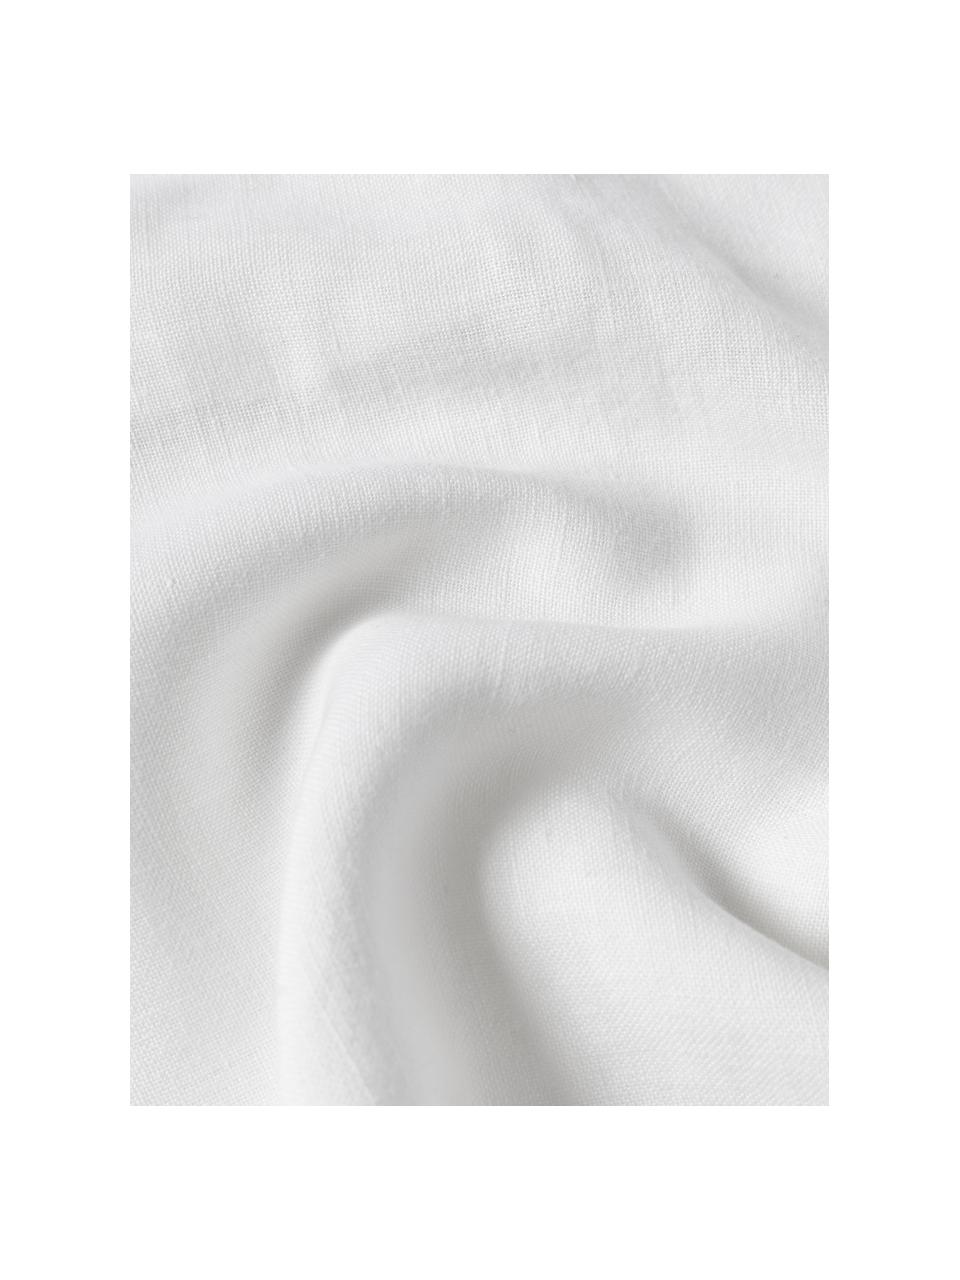 Leinen-Kissenhülle Lanya, 100% Leinen, Weiß, B 40 x L 40 cm